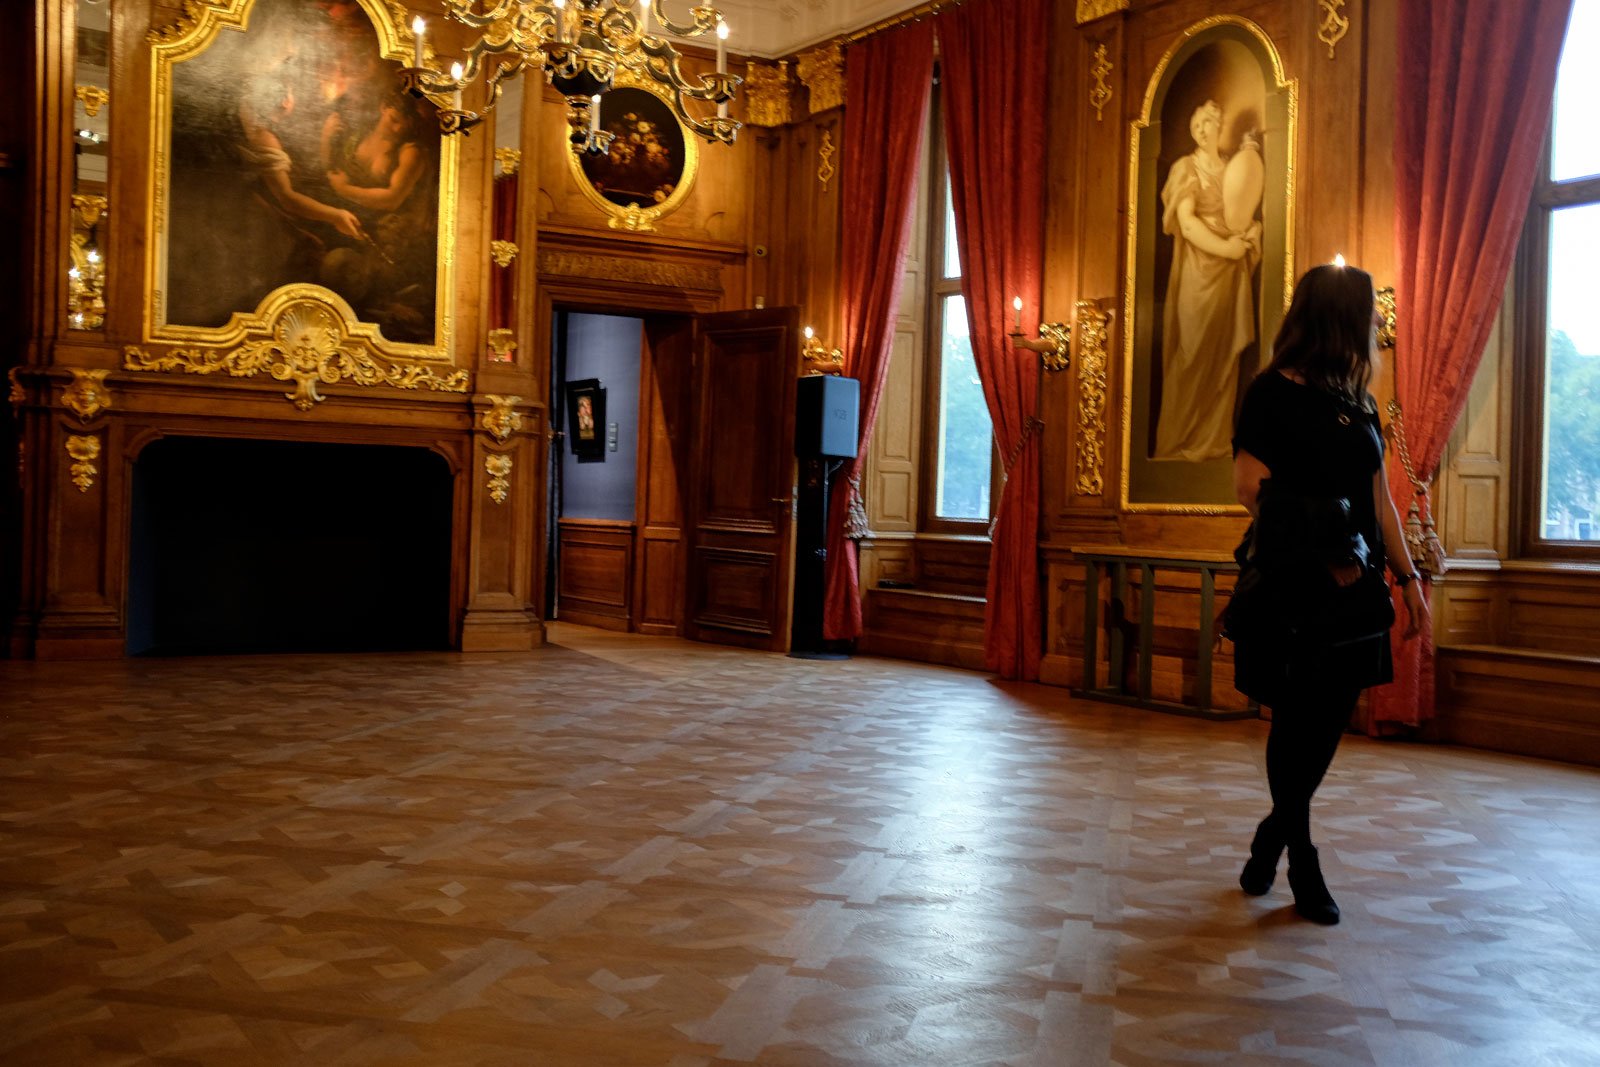 Alyssa walks through an ornate room at Mauritshuis